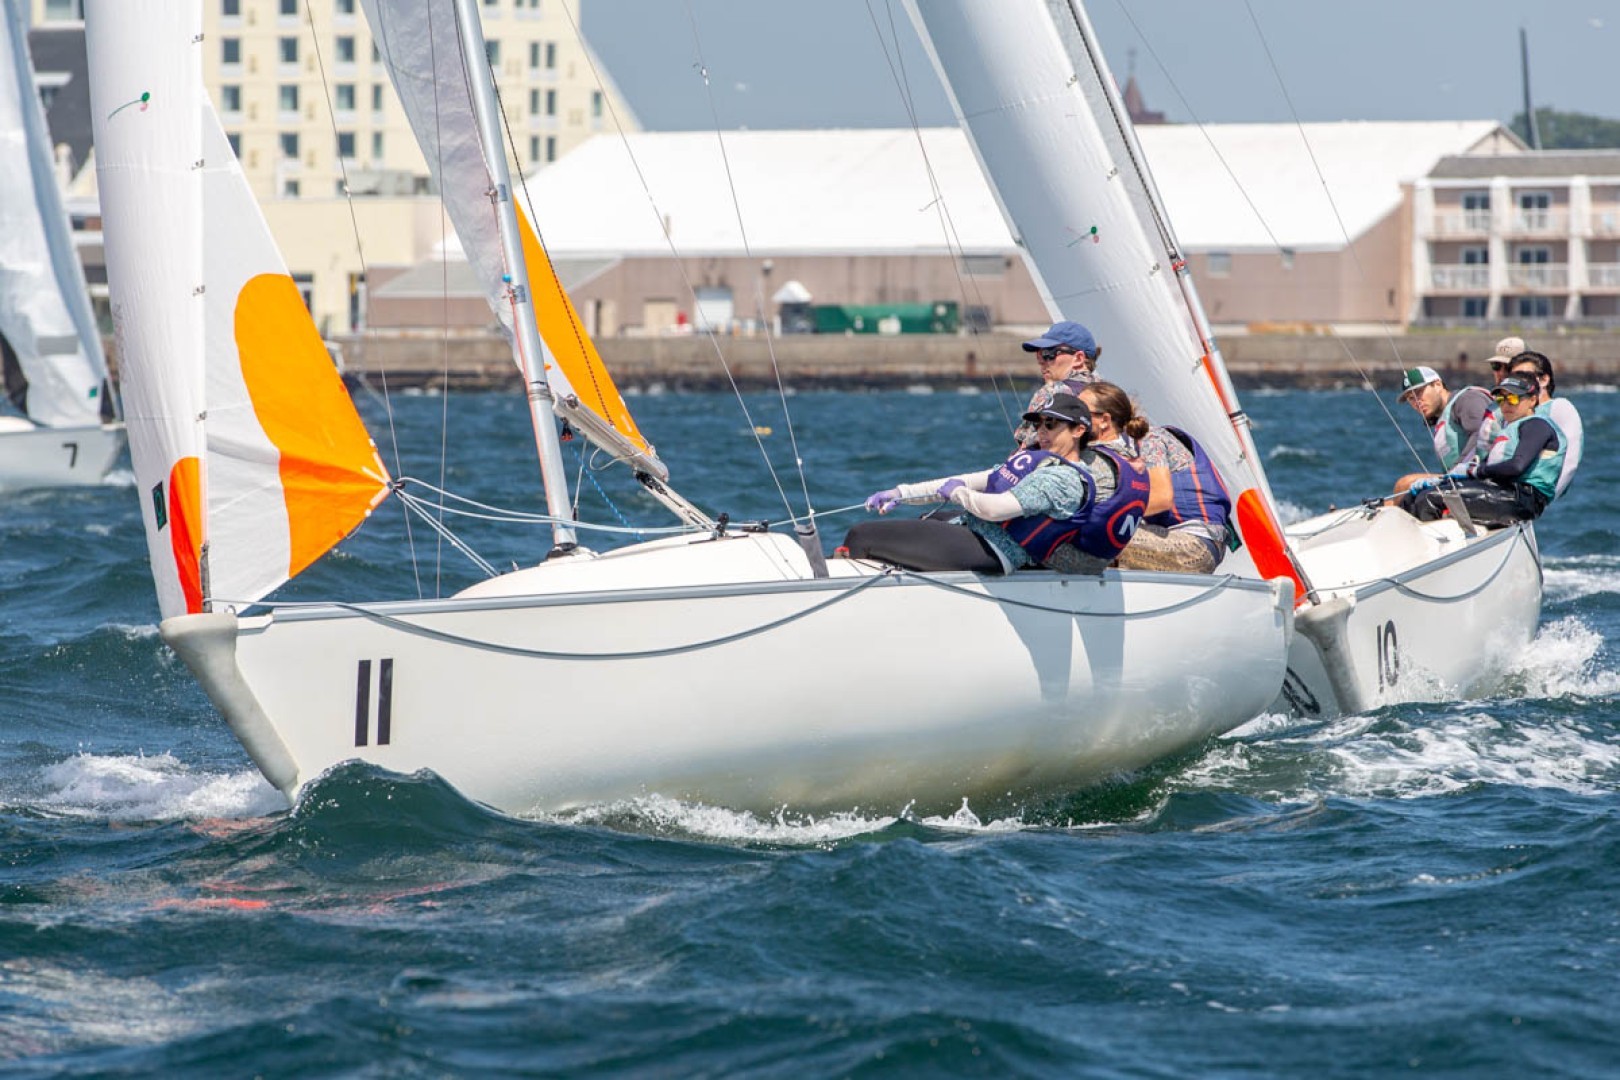 West Coast Sailors look right at home winning Global Team Race Regatta